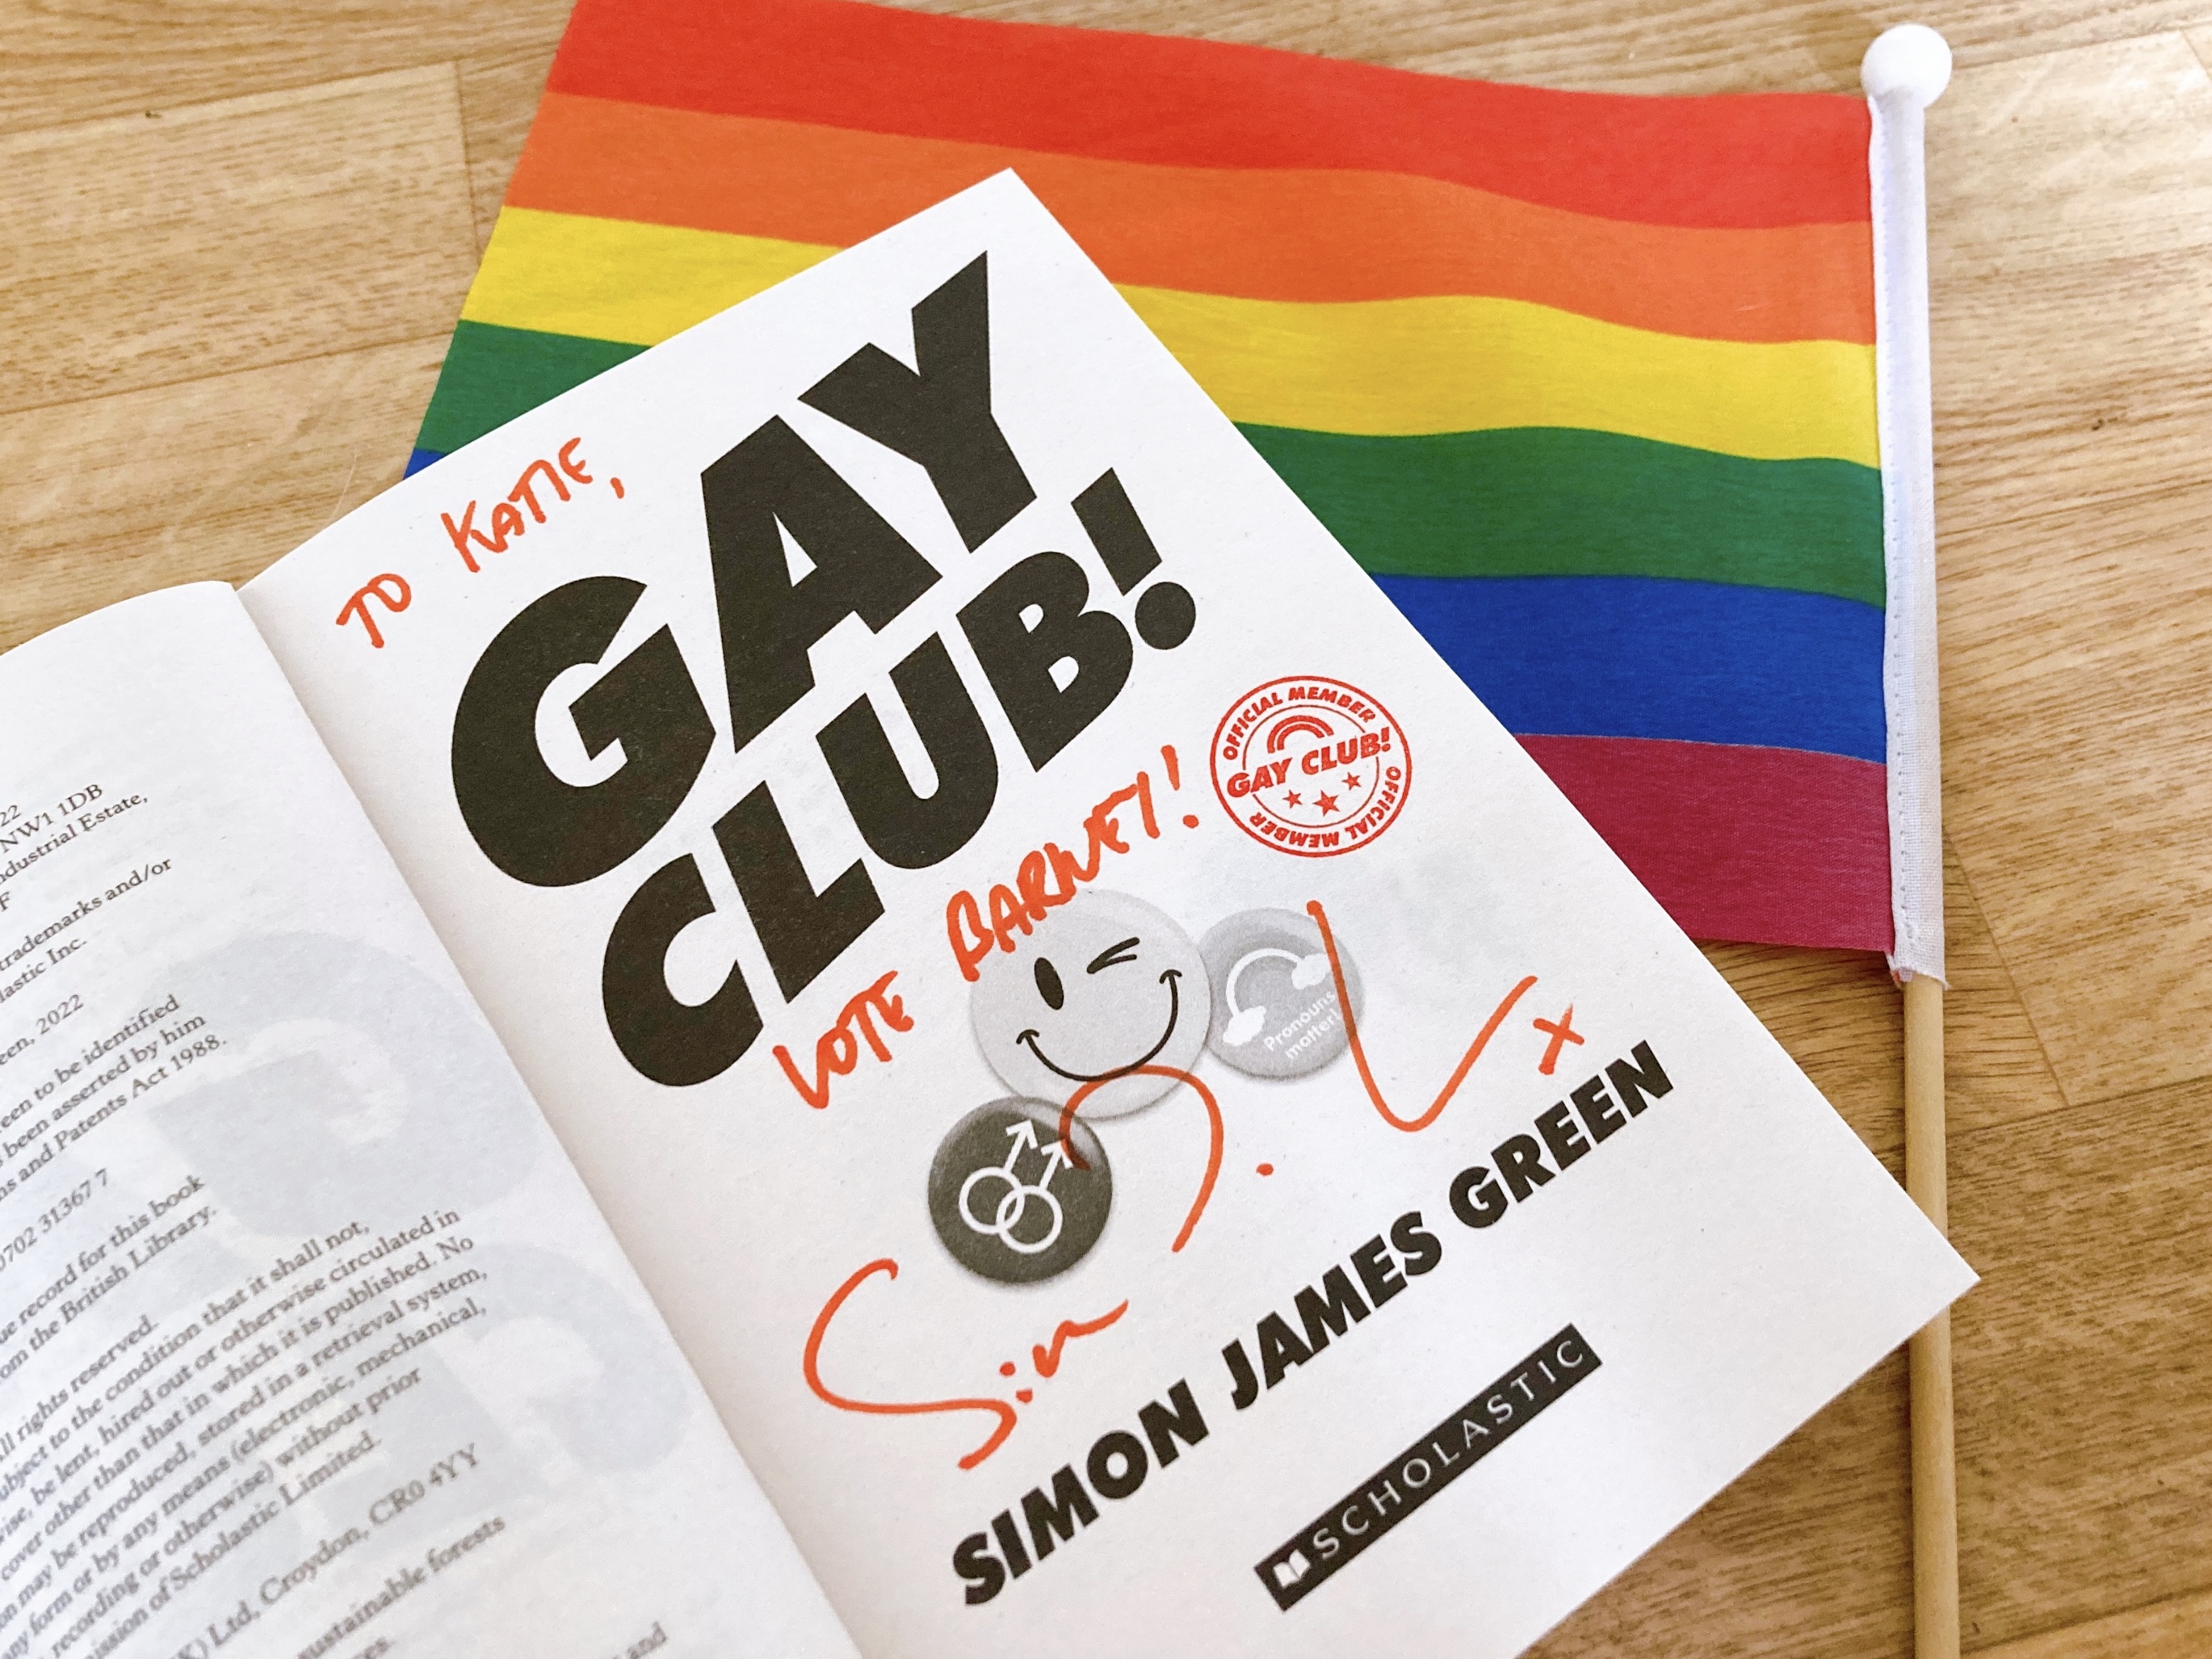 Gay Club! — Simon James Green